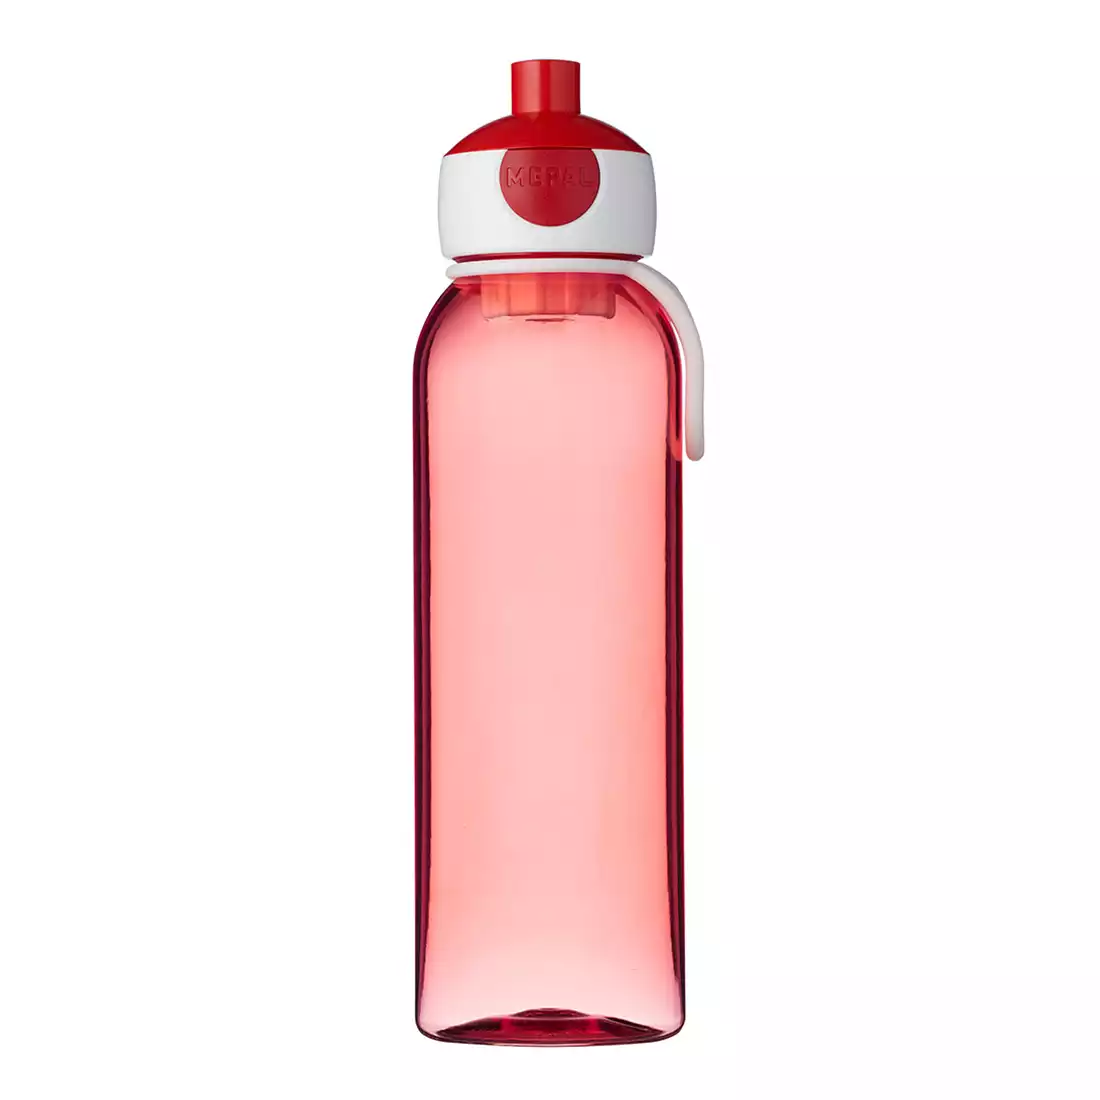 MEPAL CAMPUS water bottle 500ml, red